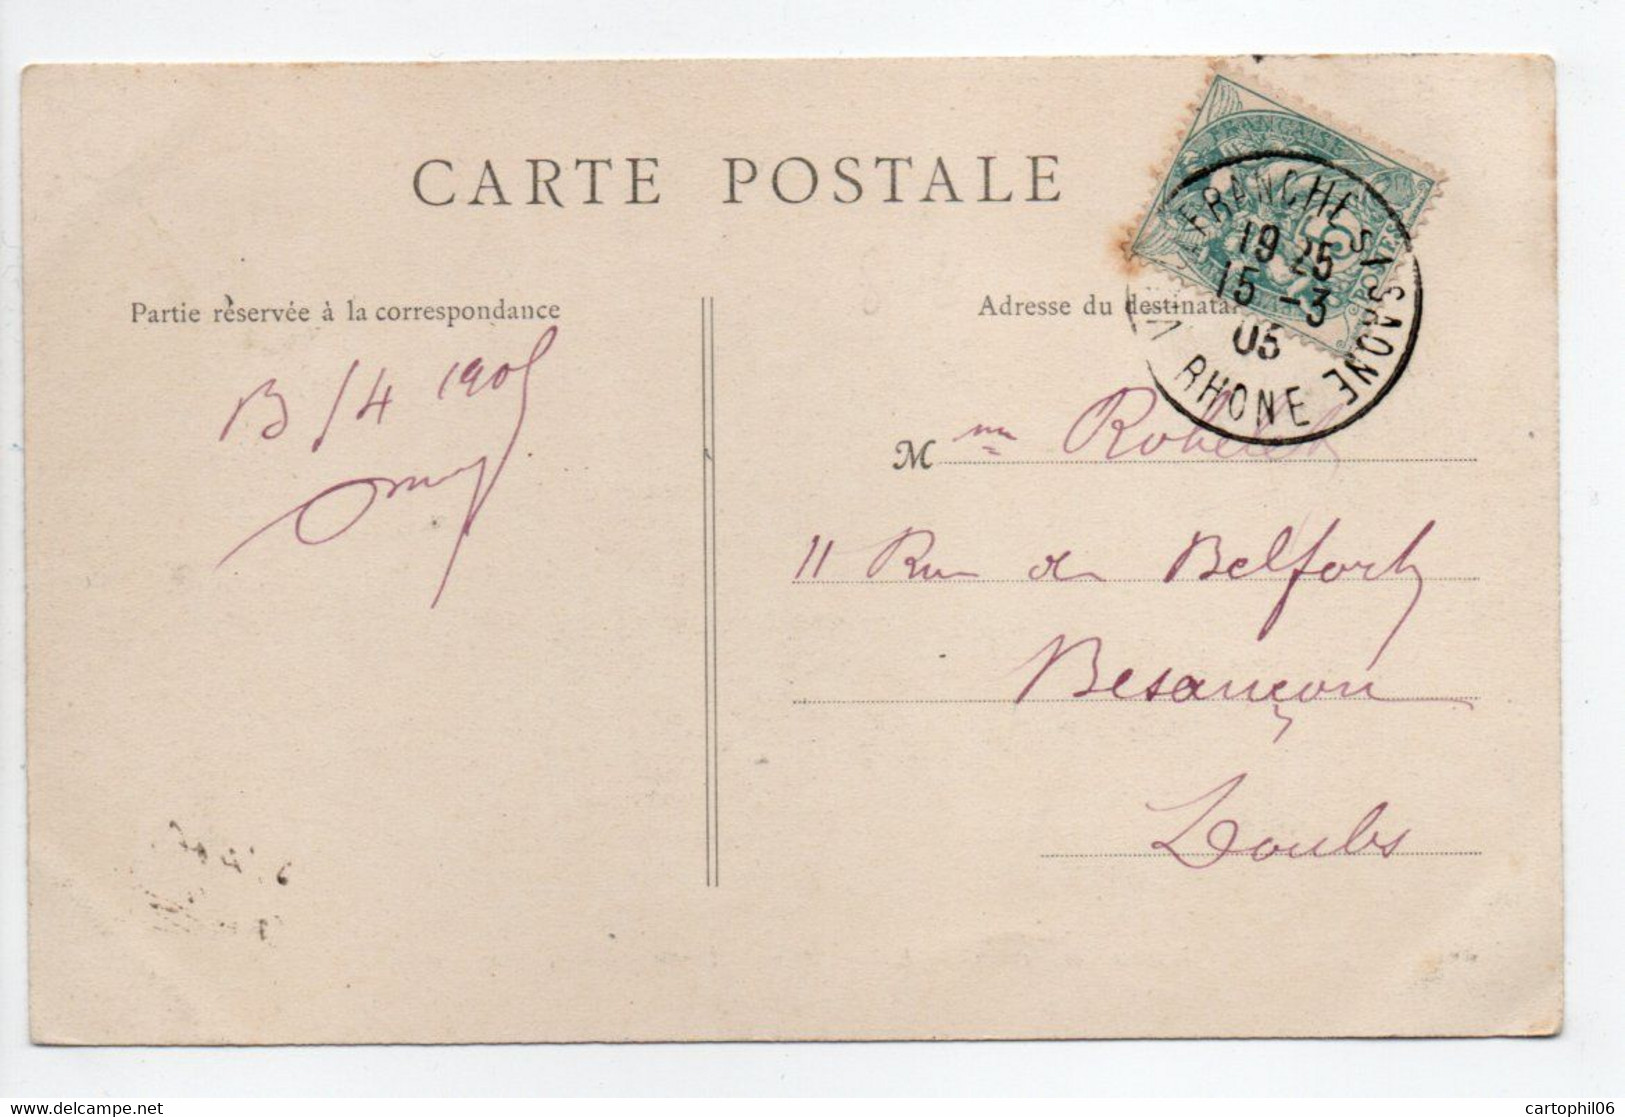 - CPA NEUVILLE-SUR-SAONE (69) - Eglise, Place Voltaire 1905 - Edition B. F. 845 - - Neuville Sur Saone